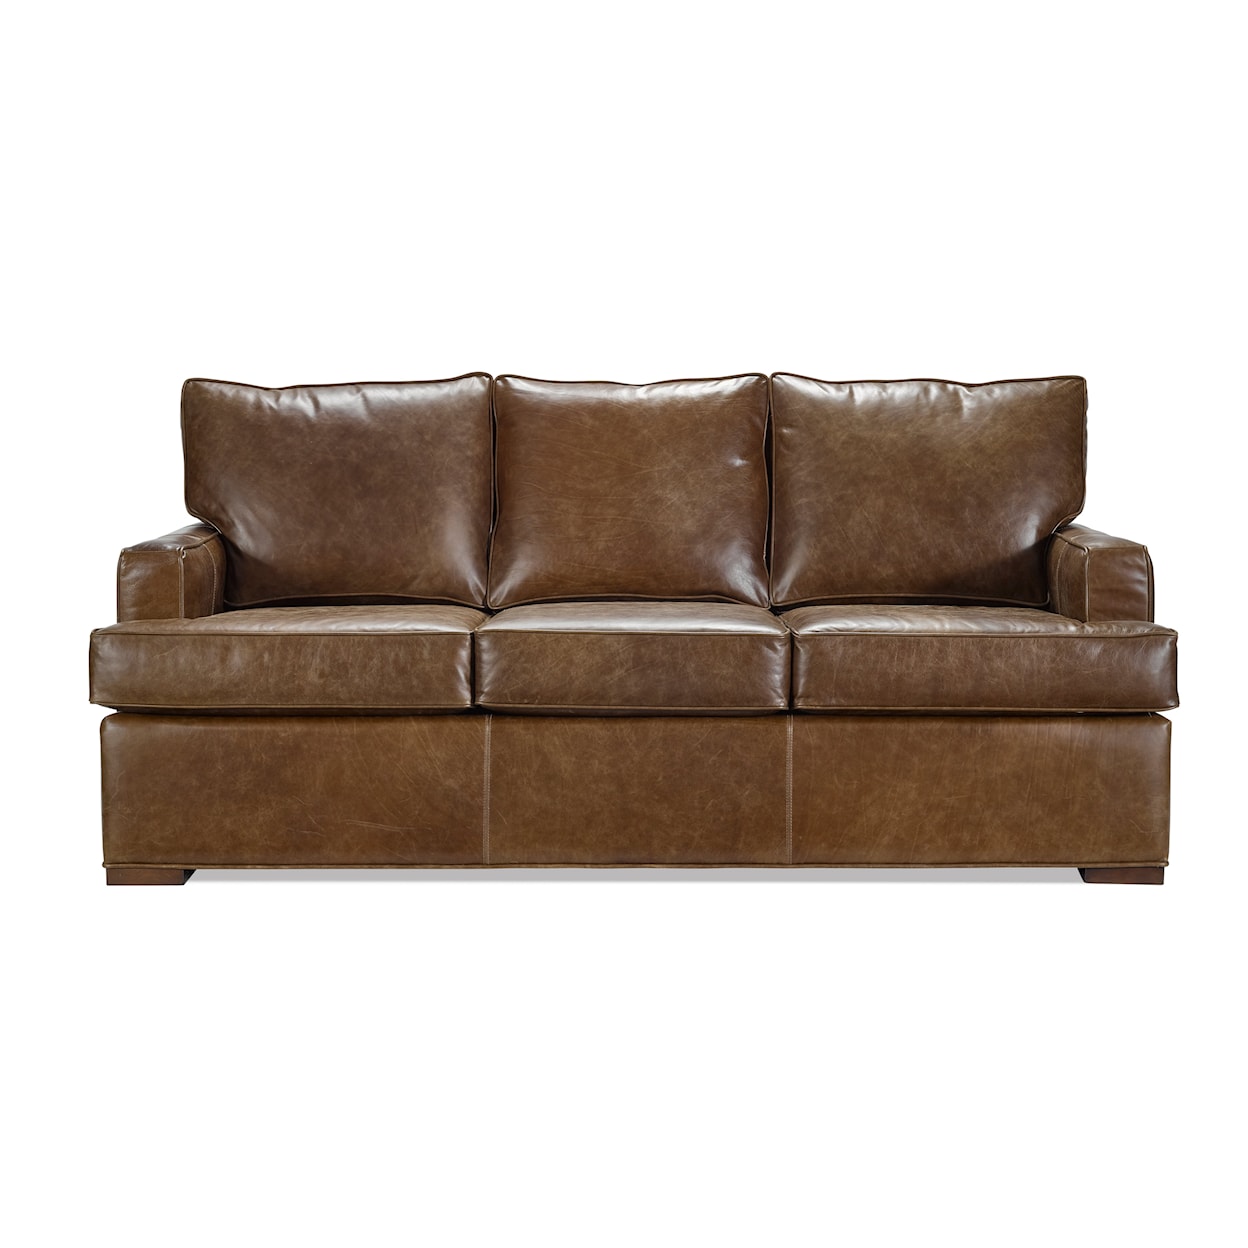 Lancer 3700 Leather Sofa